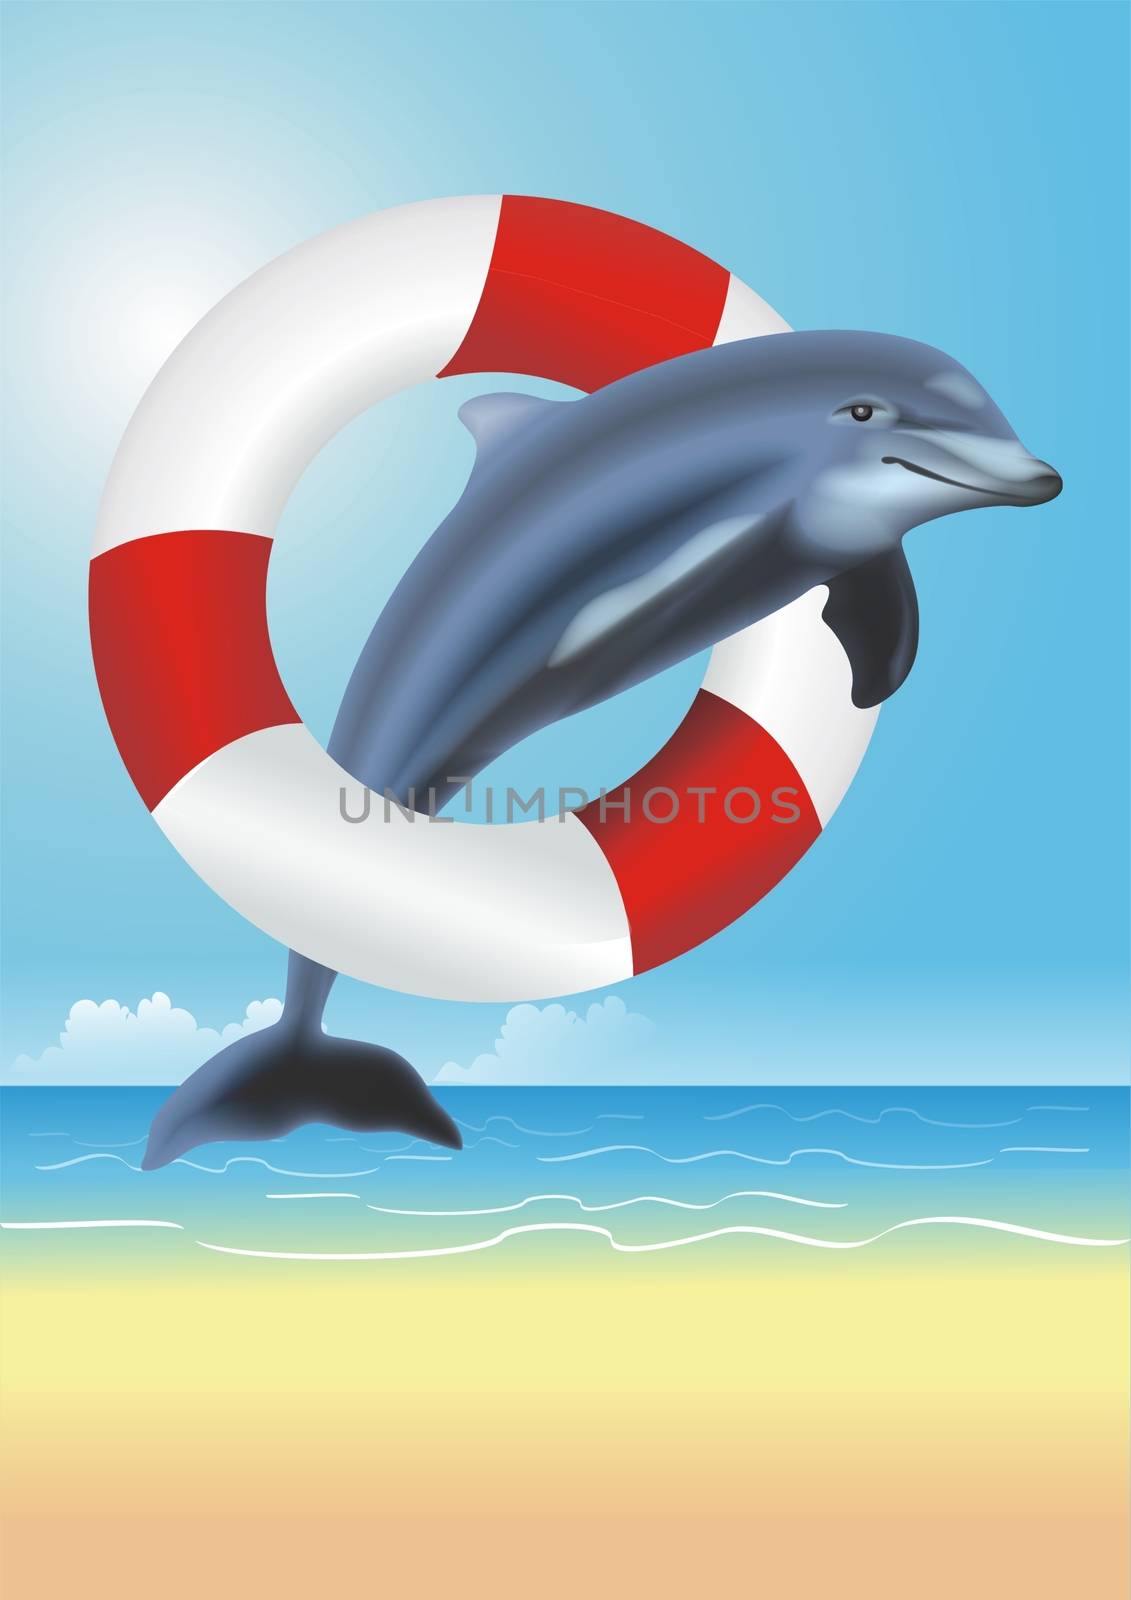 Lifesaving Dolphin Illustration by welcomia